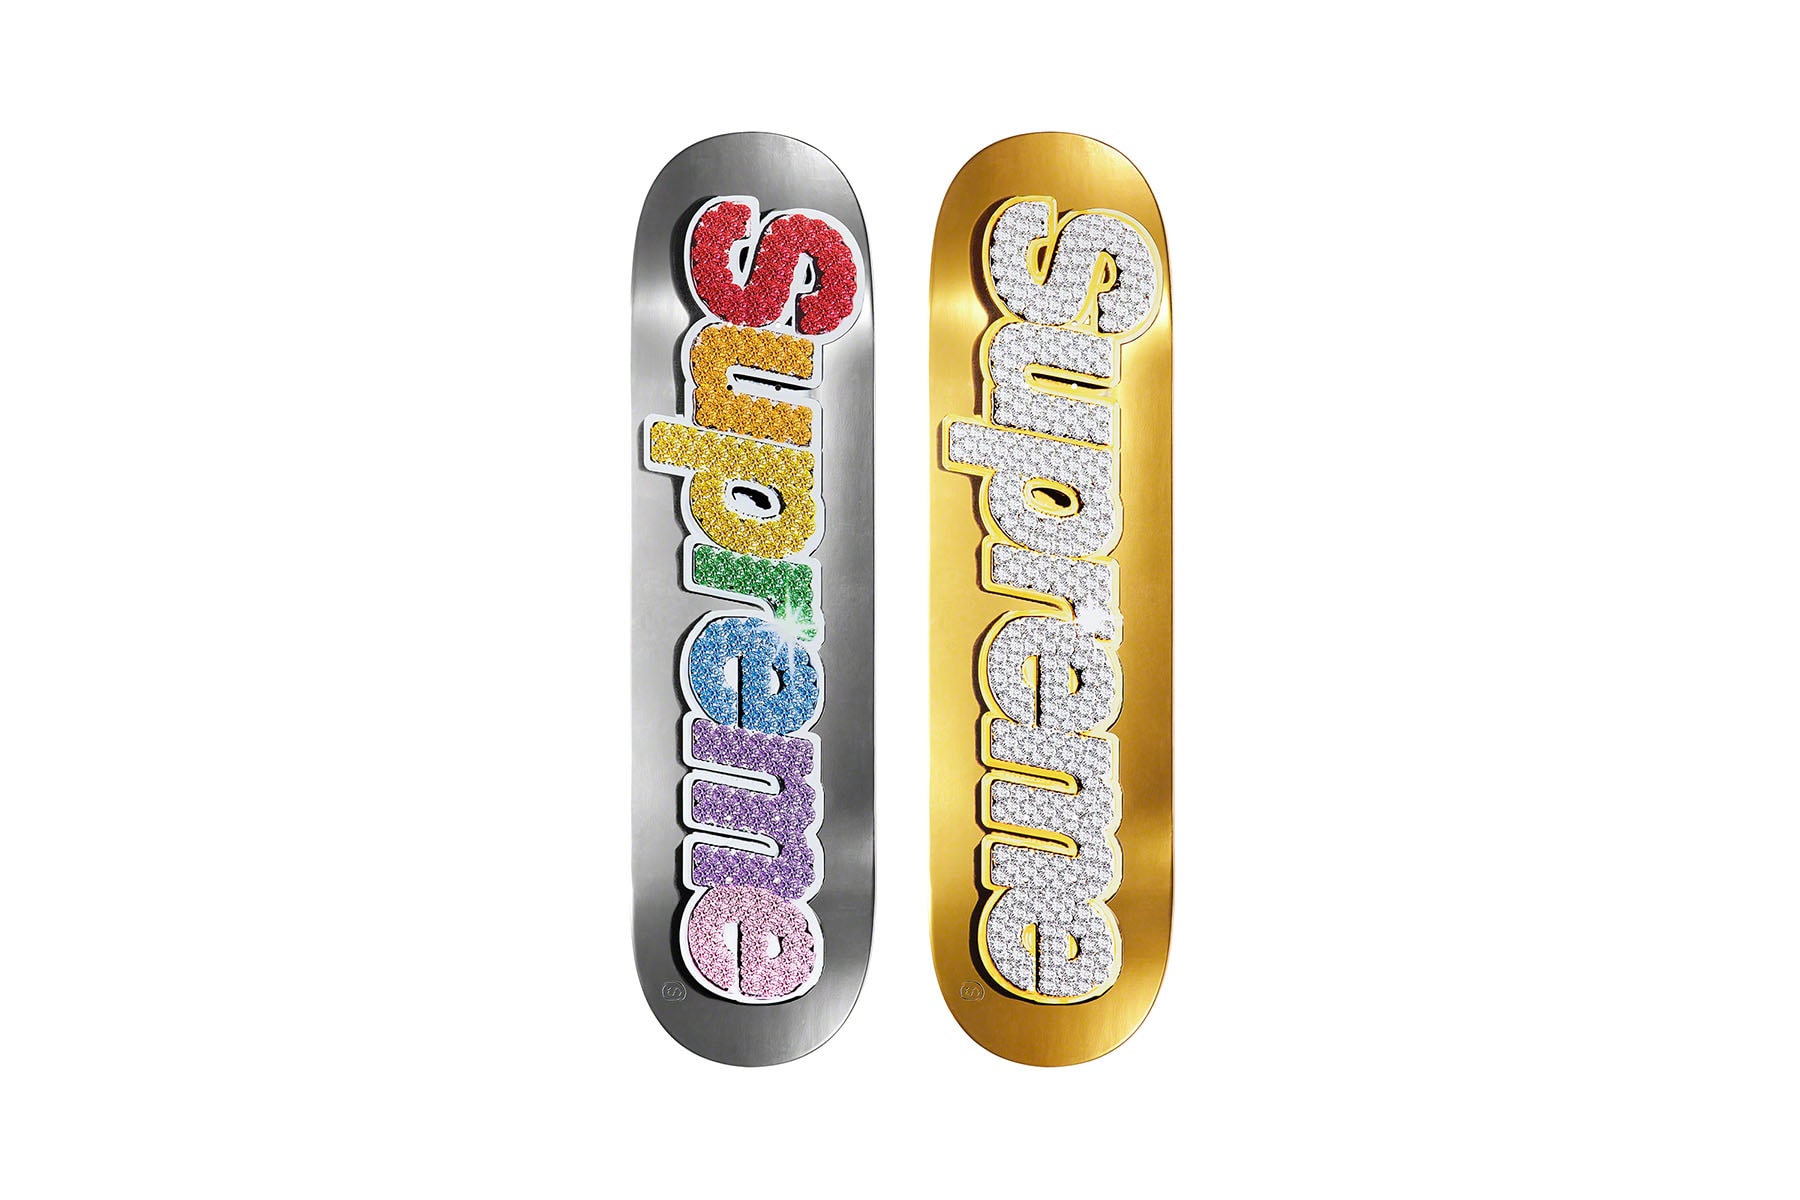 Supreme 2022 春夏帽款、包款與配件系列